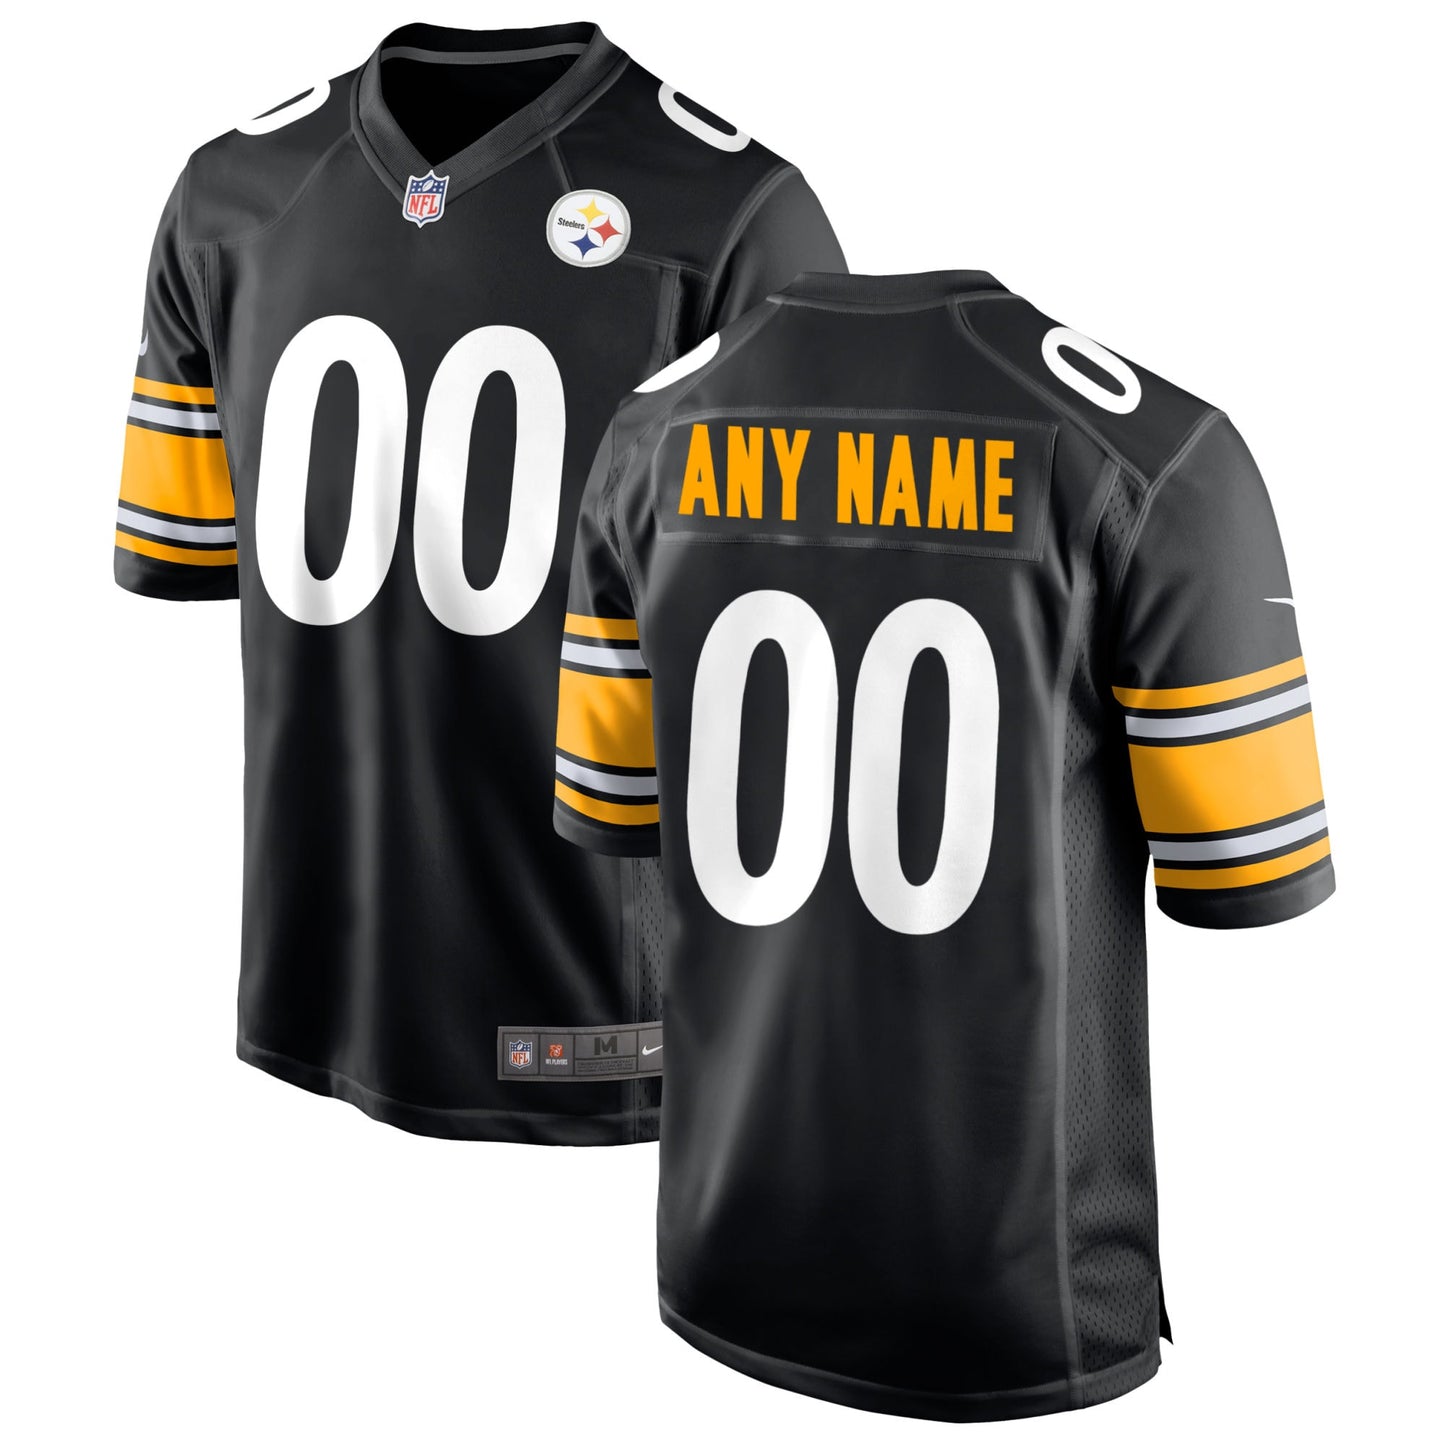 Pittsburgh Steelers Nike Custom Game Jersey - Black